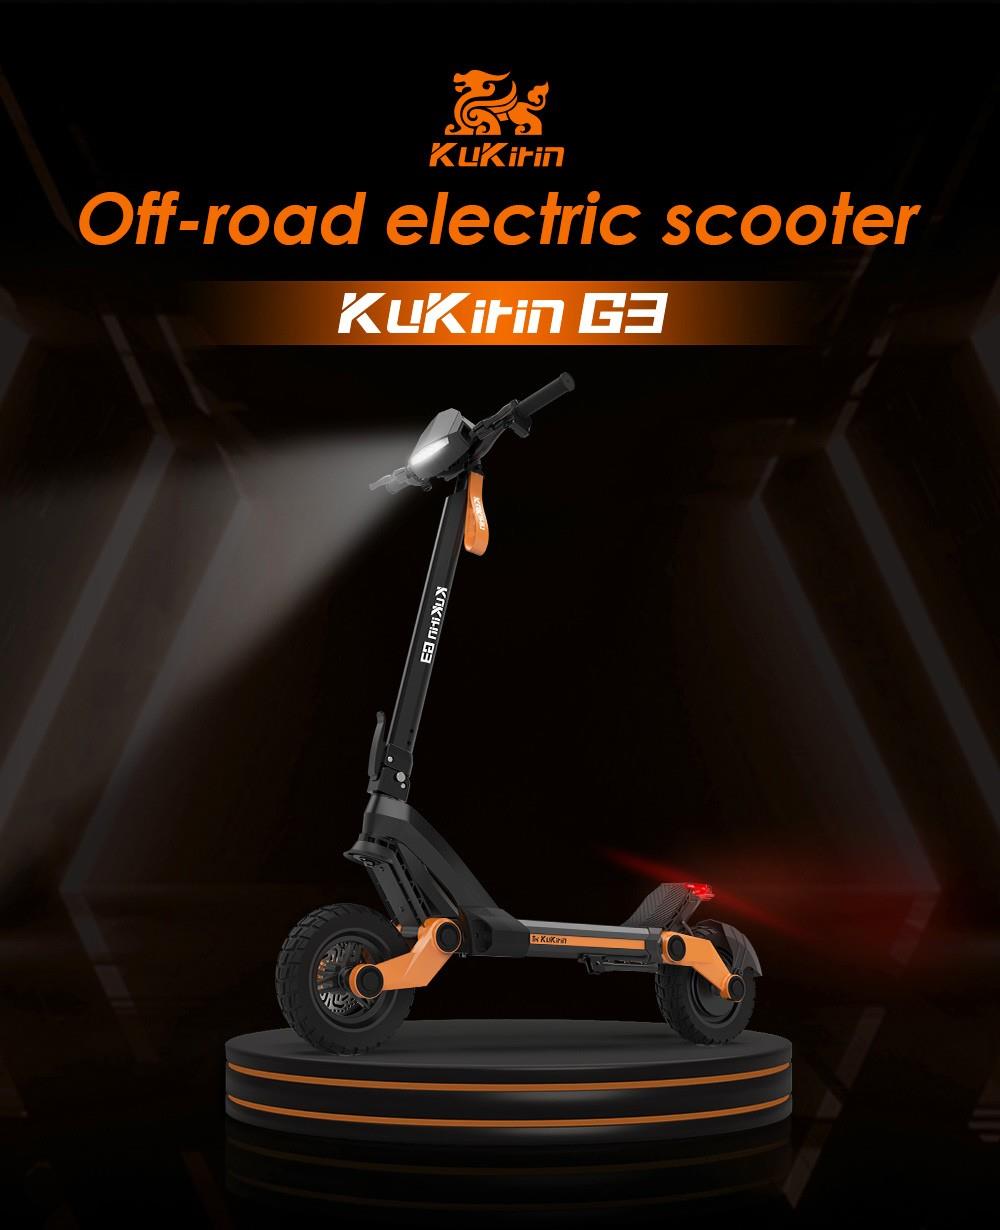 KUGOO KIRIN G3/Kukirin G3 Adventurers Dream Electric Scooter,1200W Rear Motor&52V 18Ah Battery,Touchable Display Control